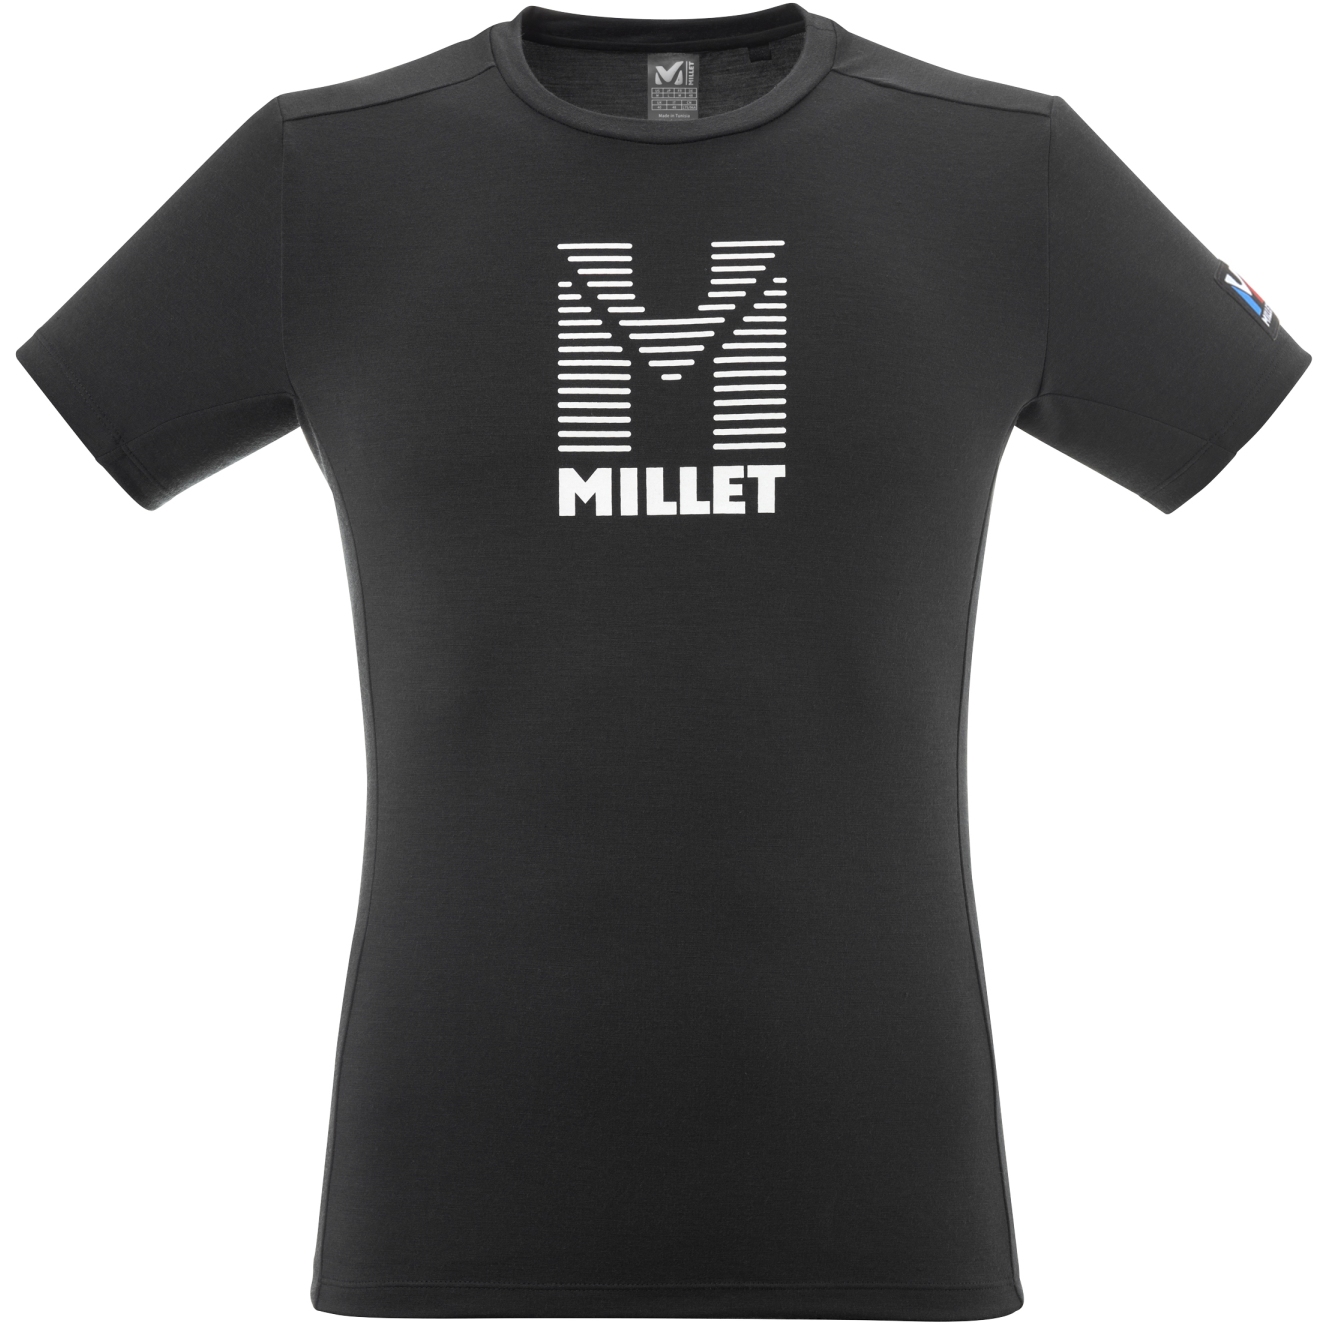 Productfoto van Millet Trilogy Wool Stripes T-Shirt Heren - Zwart